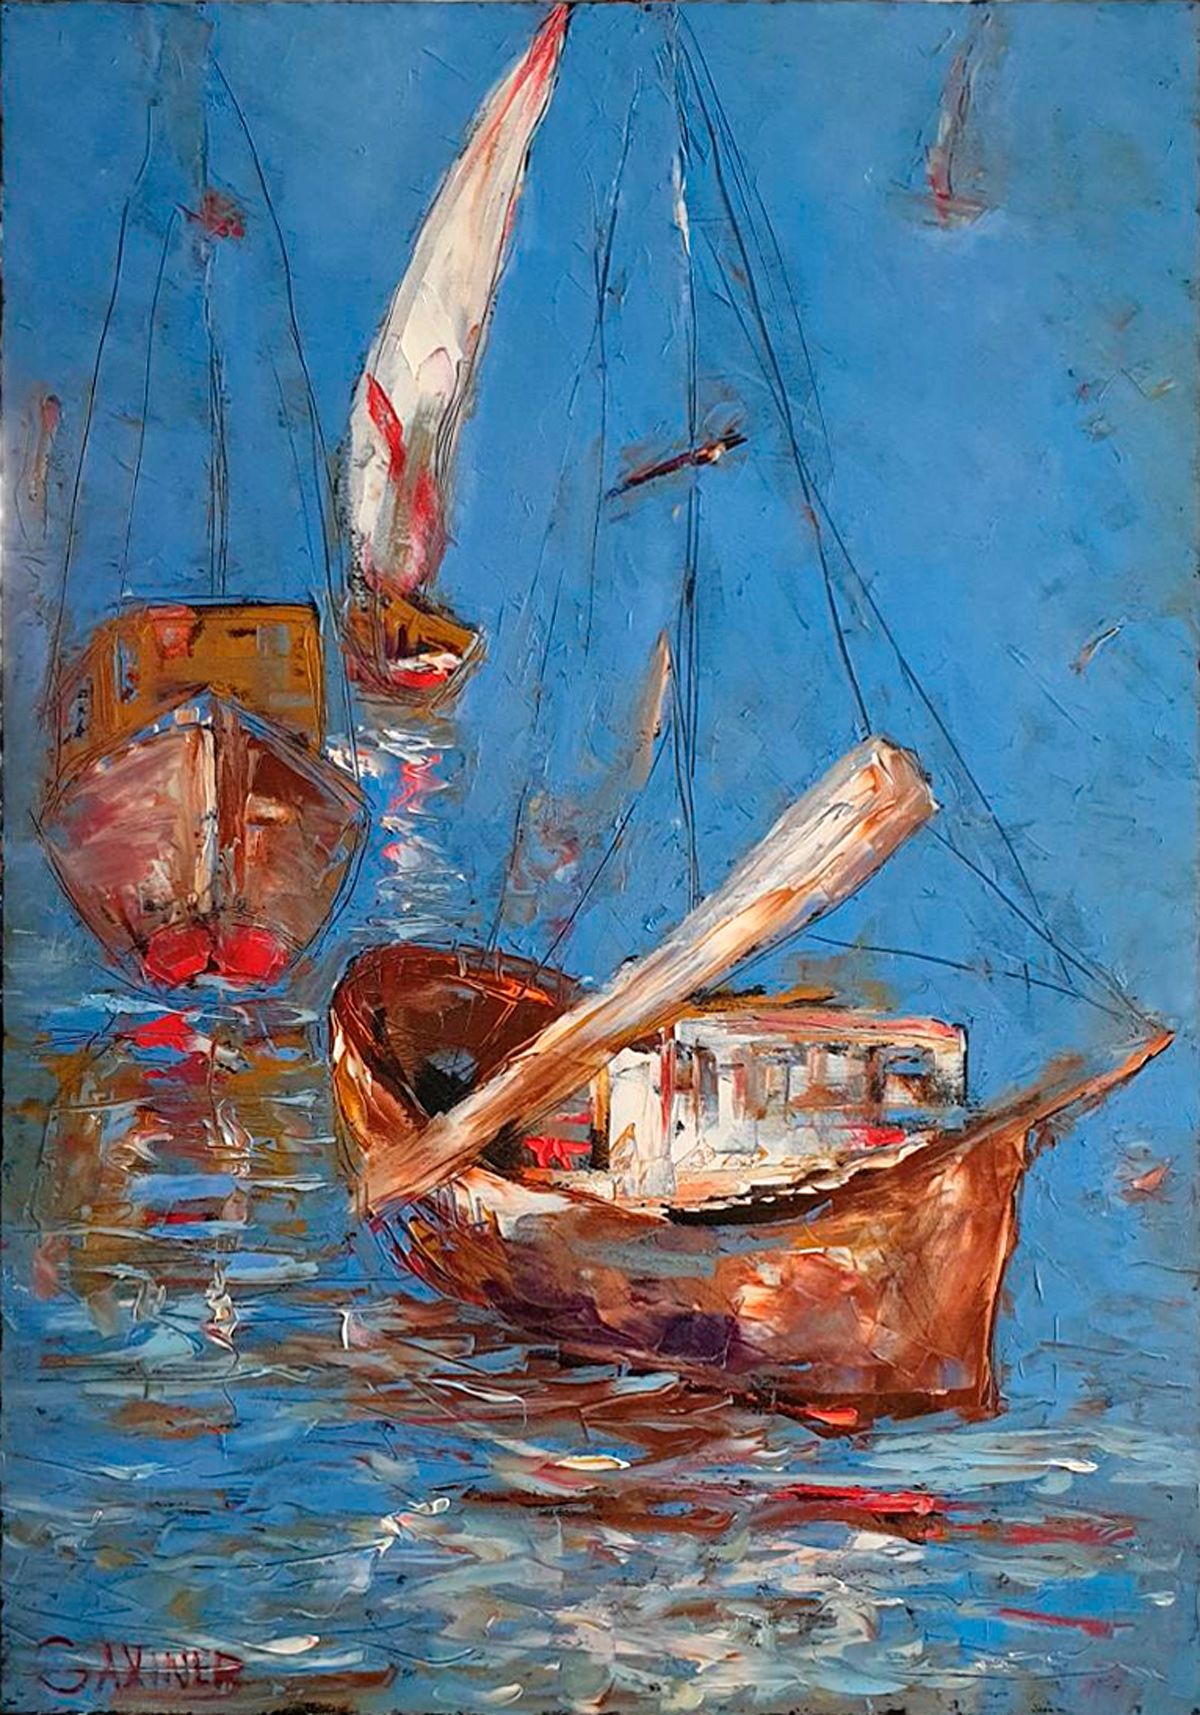 Contemporary painting. Sea. Sailing ships. Marine fishing boats. In shades of blue